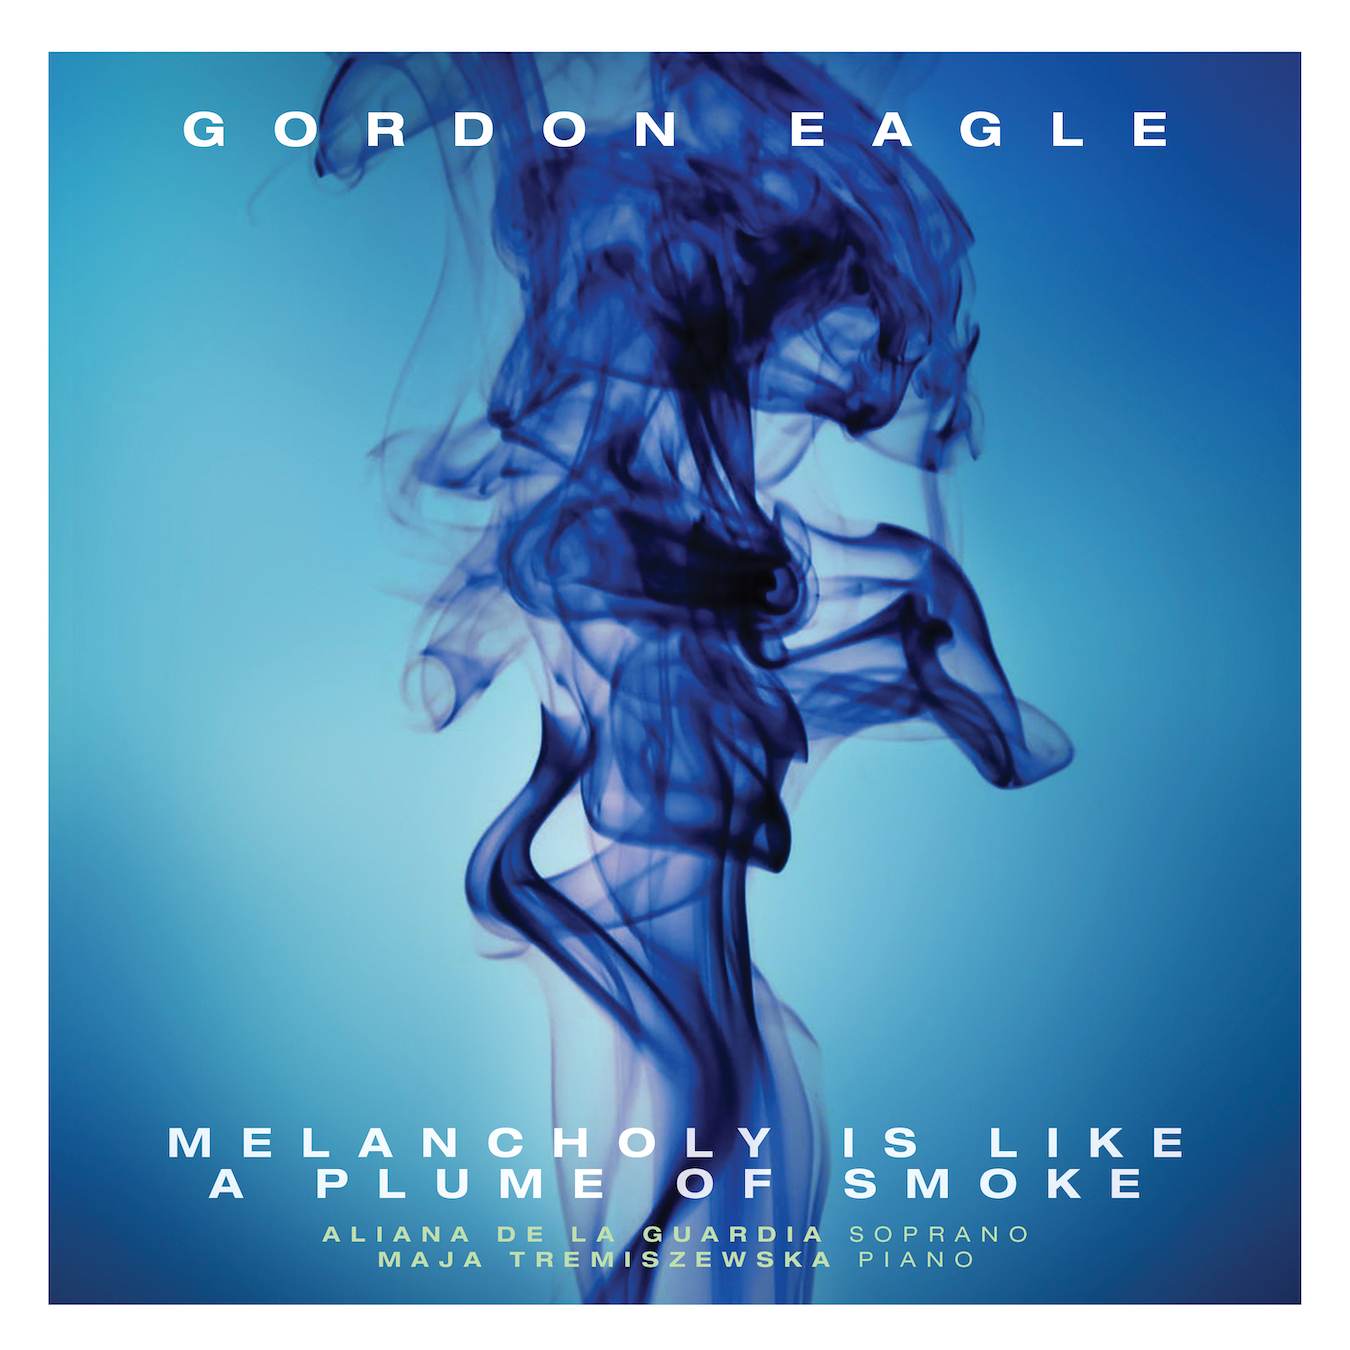 Melancholy is Like a Plume of Smoke - Gordon Eagle - Album Cover